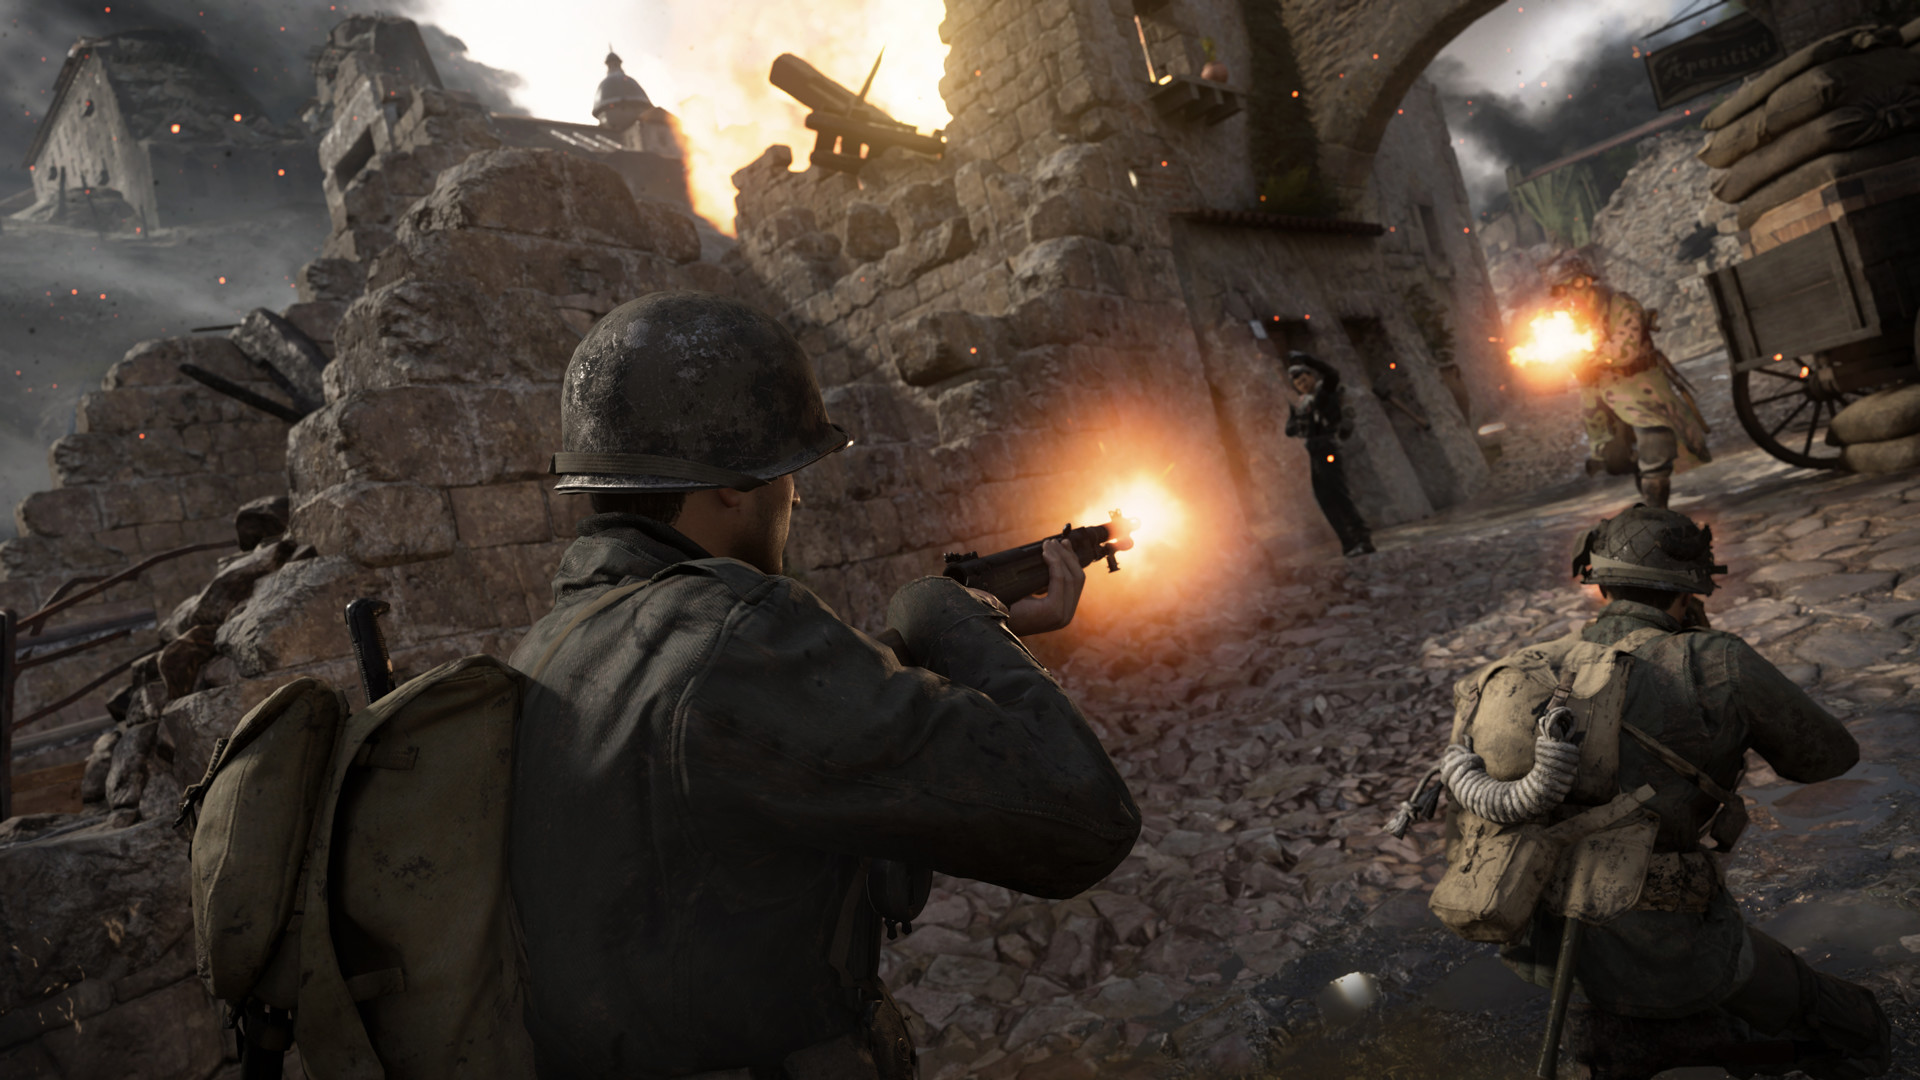 Poupa 50% em Call of Duty®: WWII - Season Pass no Steam